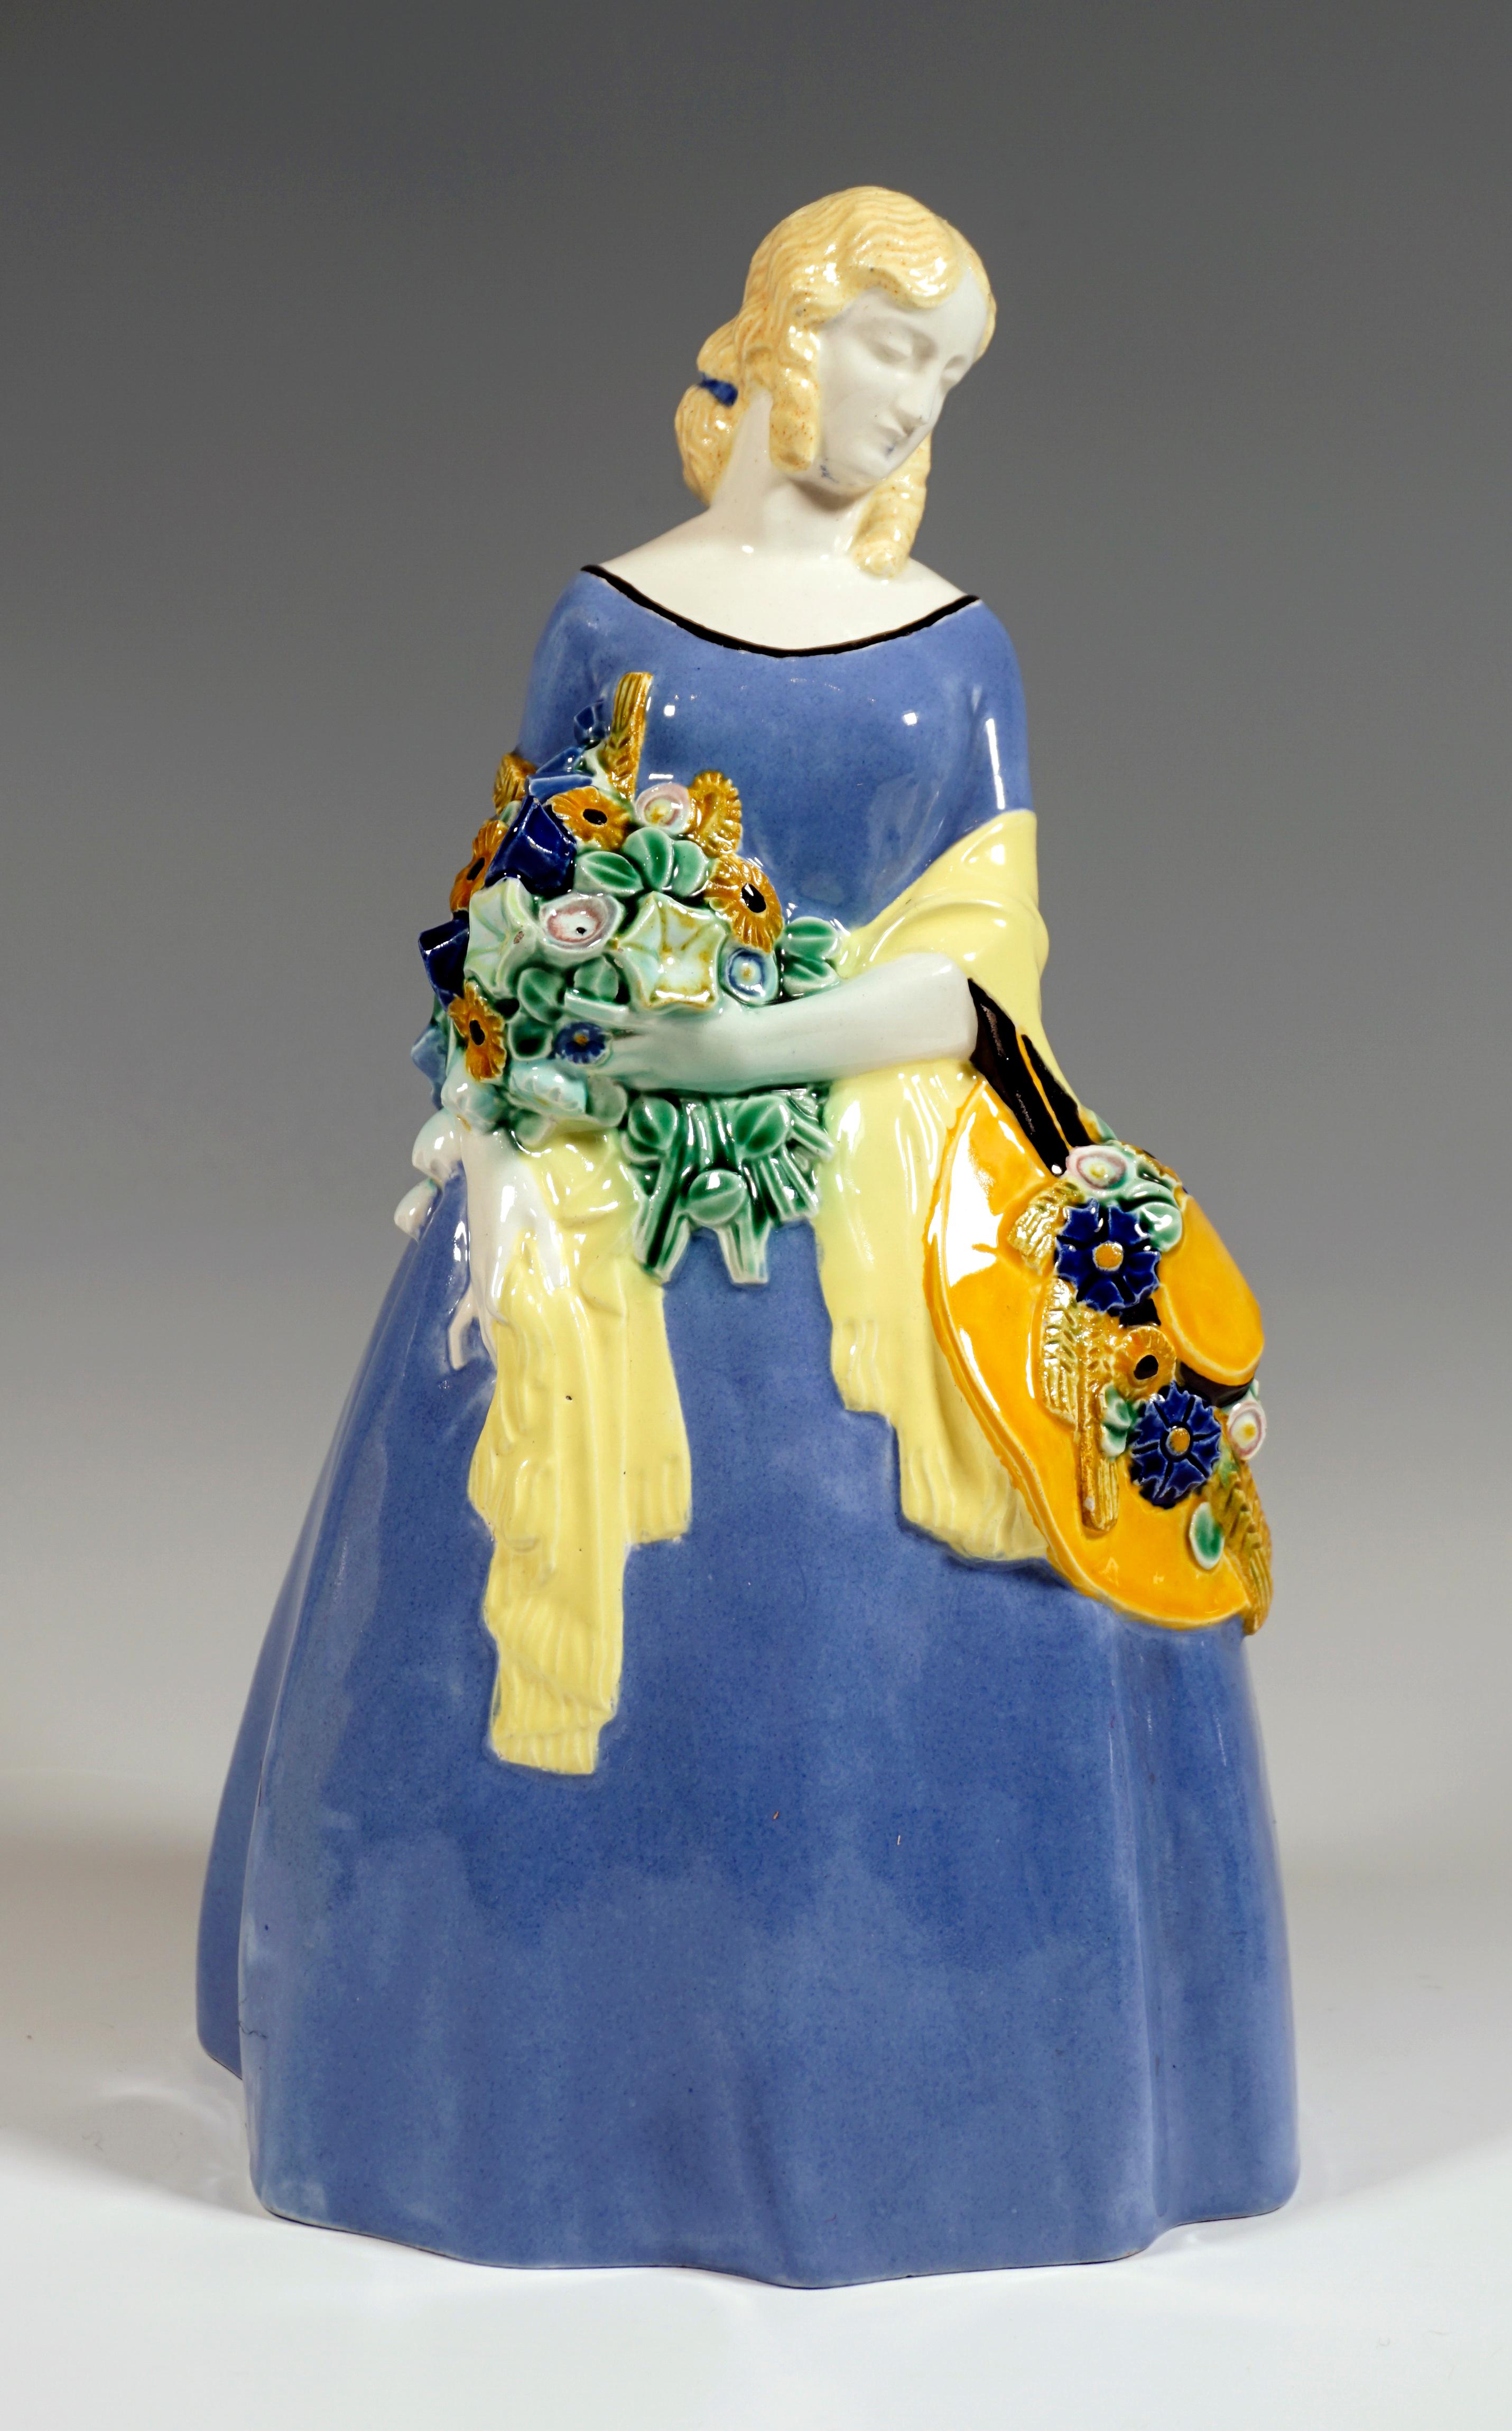 Painted Four Seasonal Crinoline Figurines by Michael Powolny, Viennese Ceramics, c. 1910